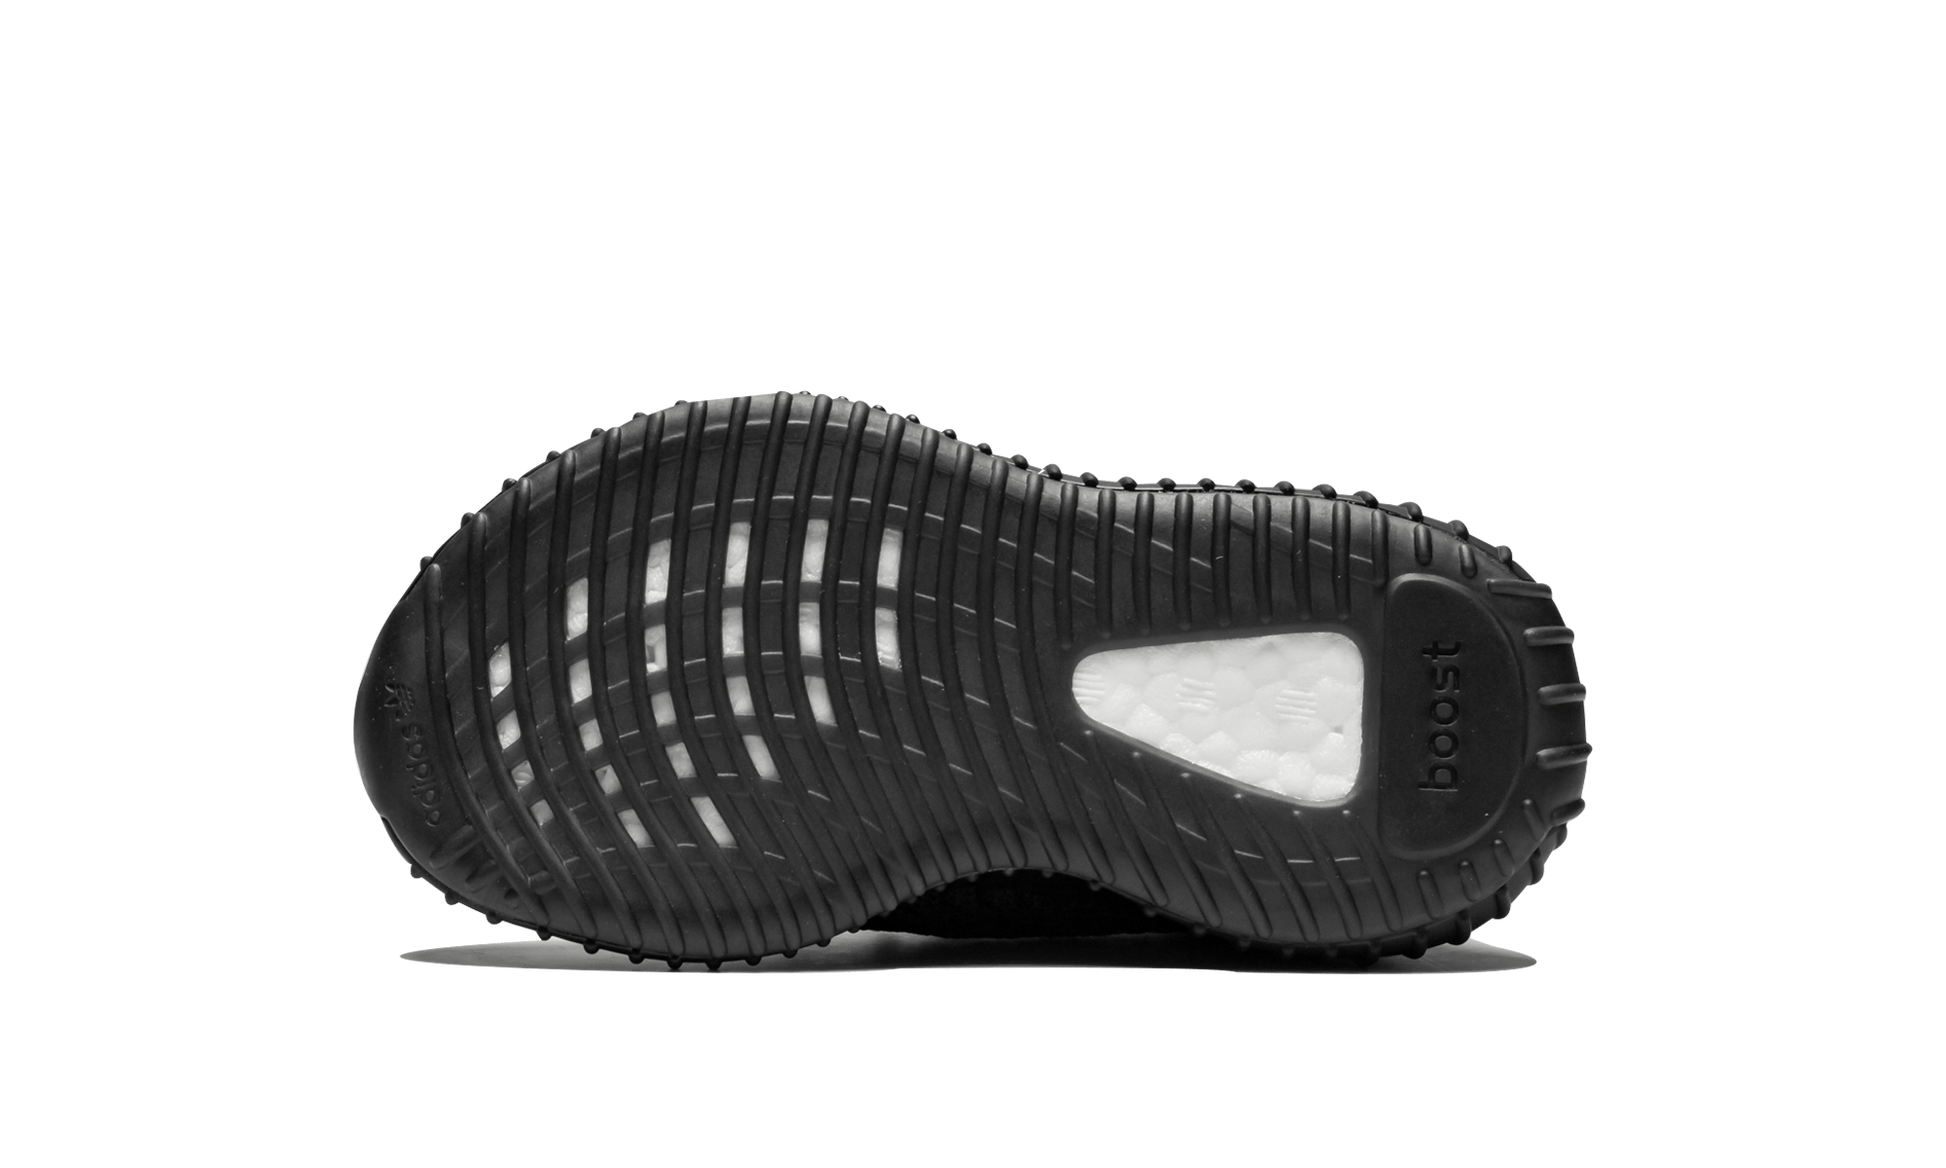 Adidas Yeezy Boost 350 V2 Infants “Black”- FU9011 - 2019